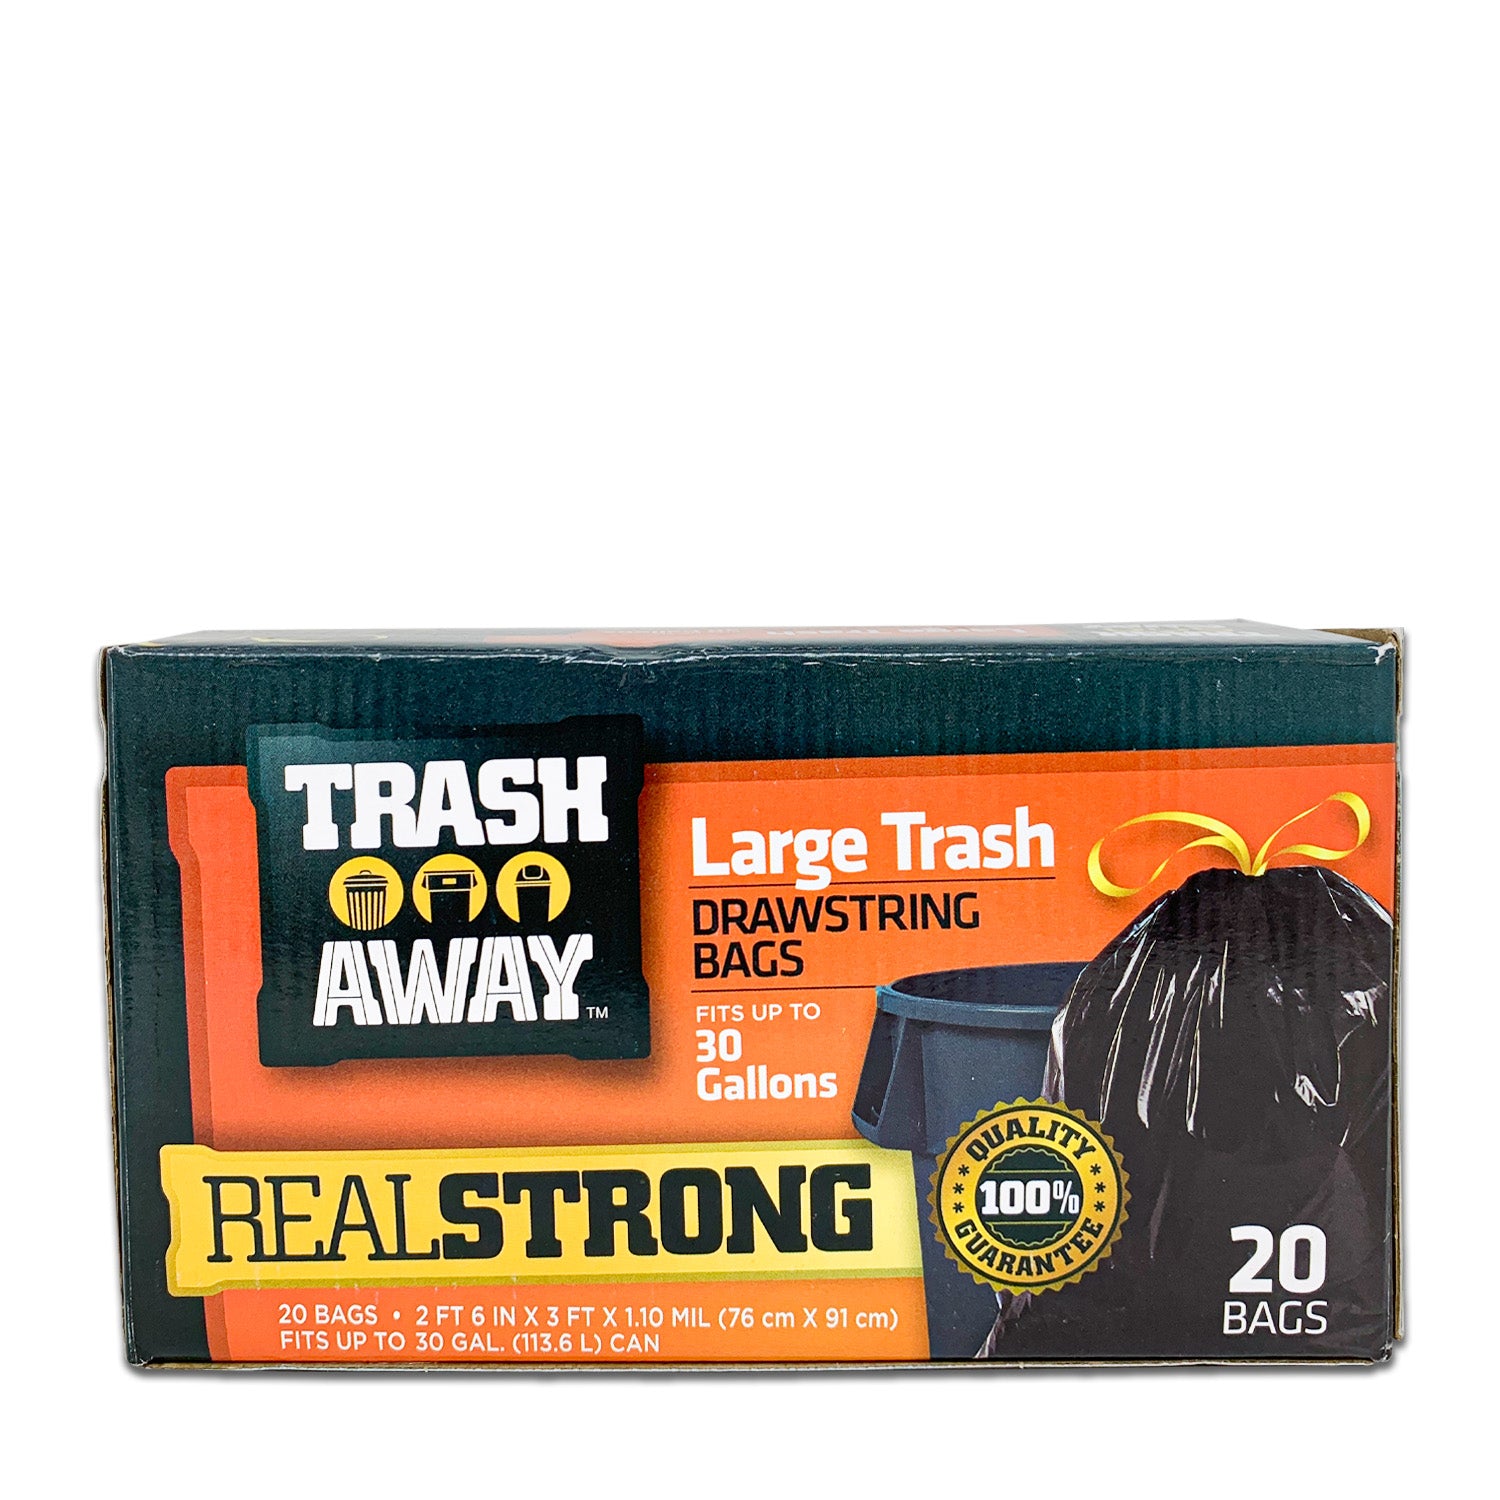 Ultrasac Trash Bags 